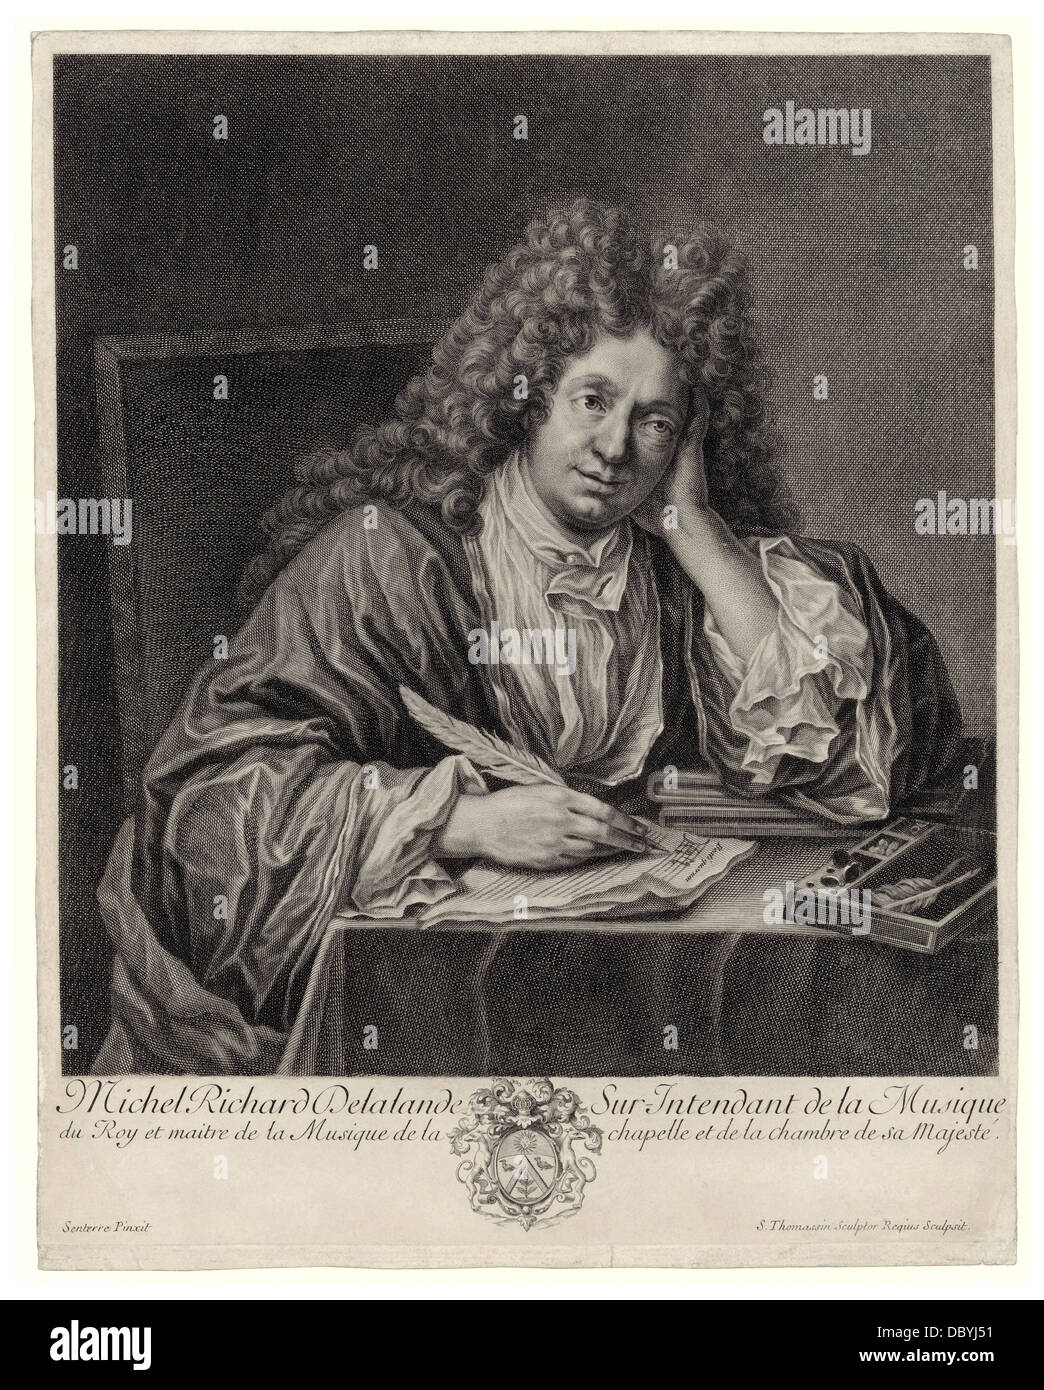 Michel-Richard Delalande (1657-1726), french baroque composer. Engraving, ca.1700. Stock Photo